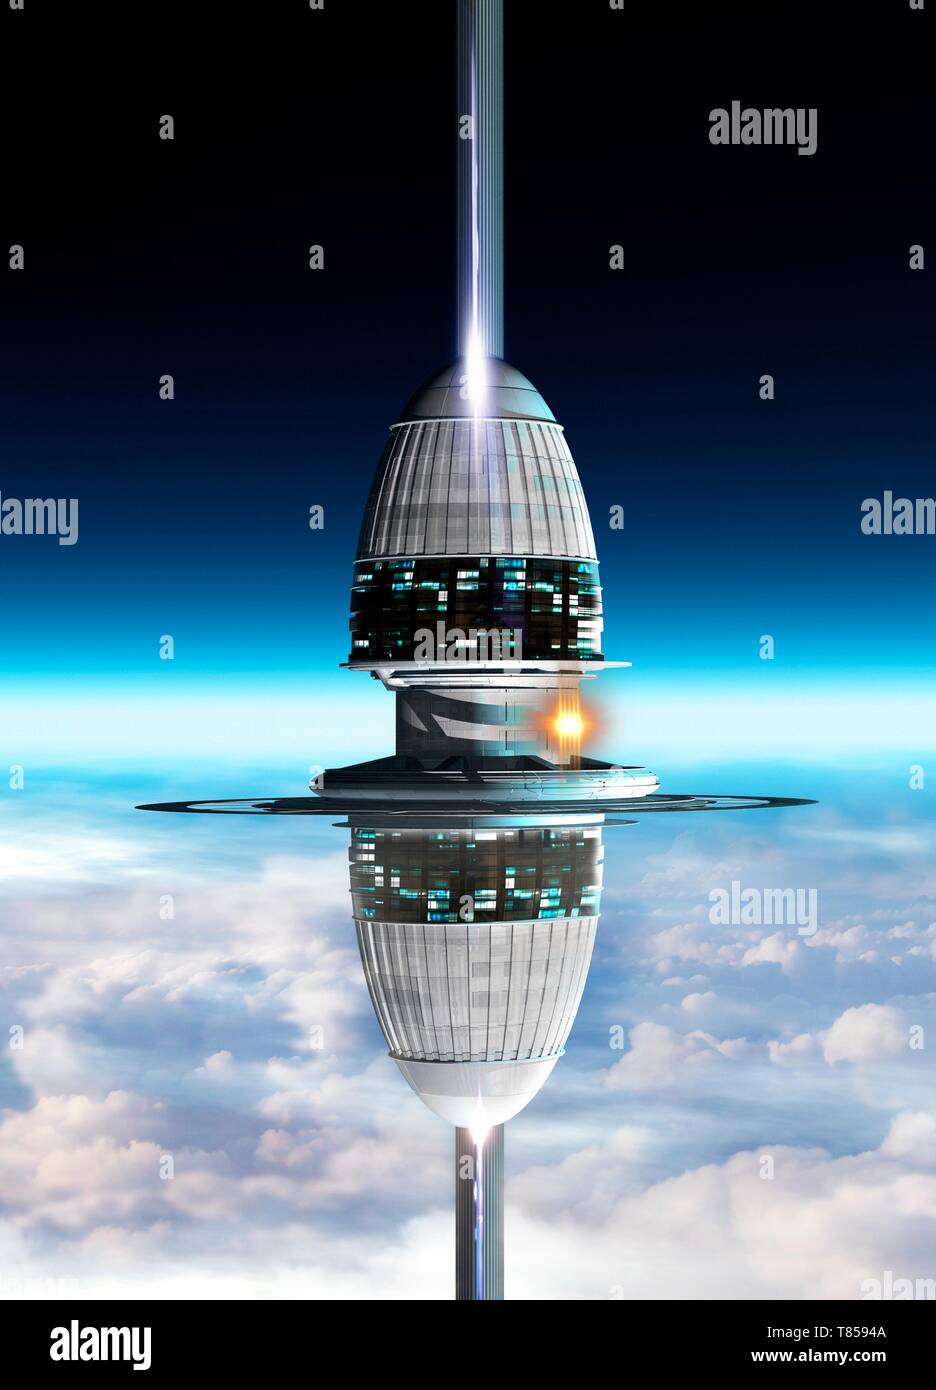 Space elevator, illustration Stock Photo